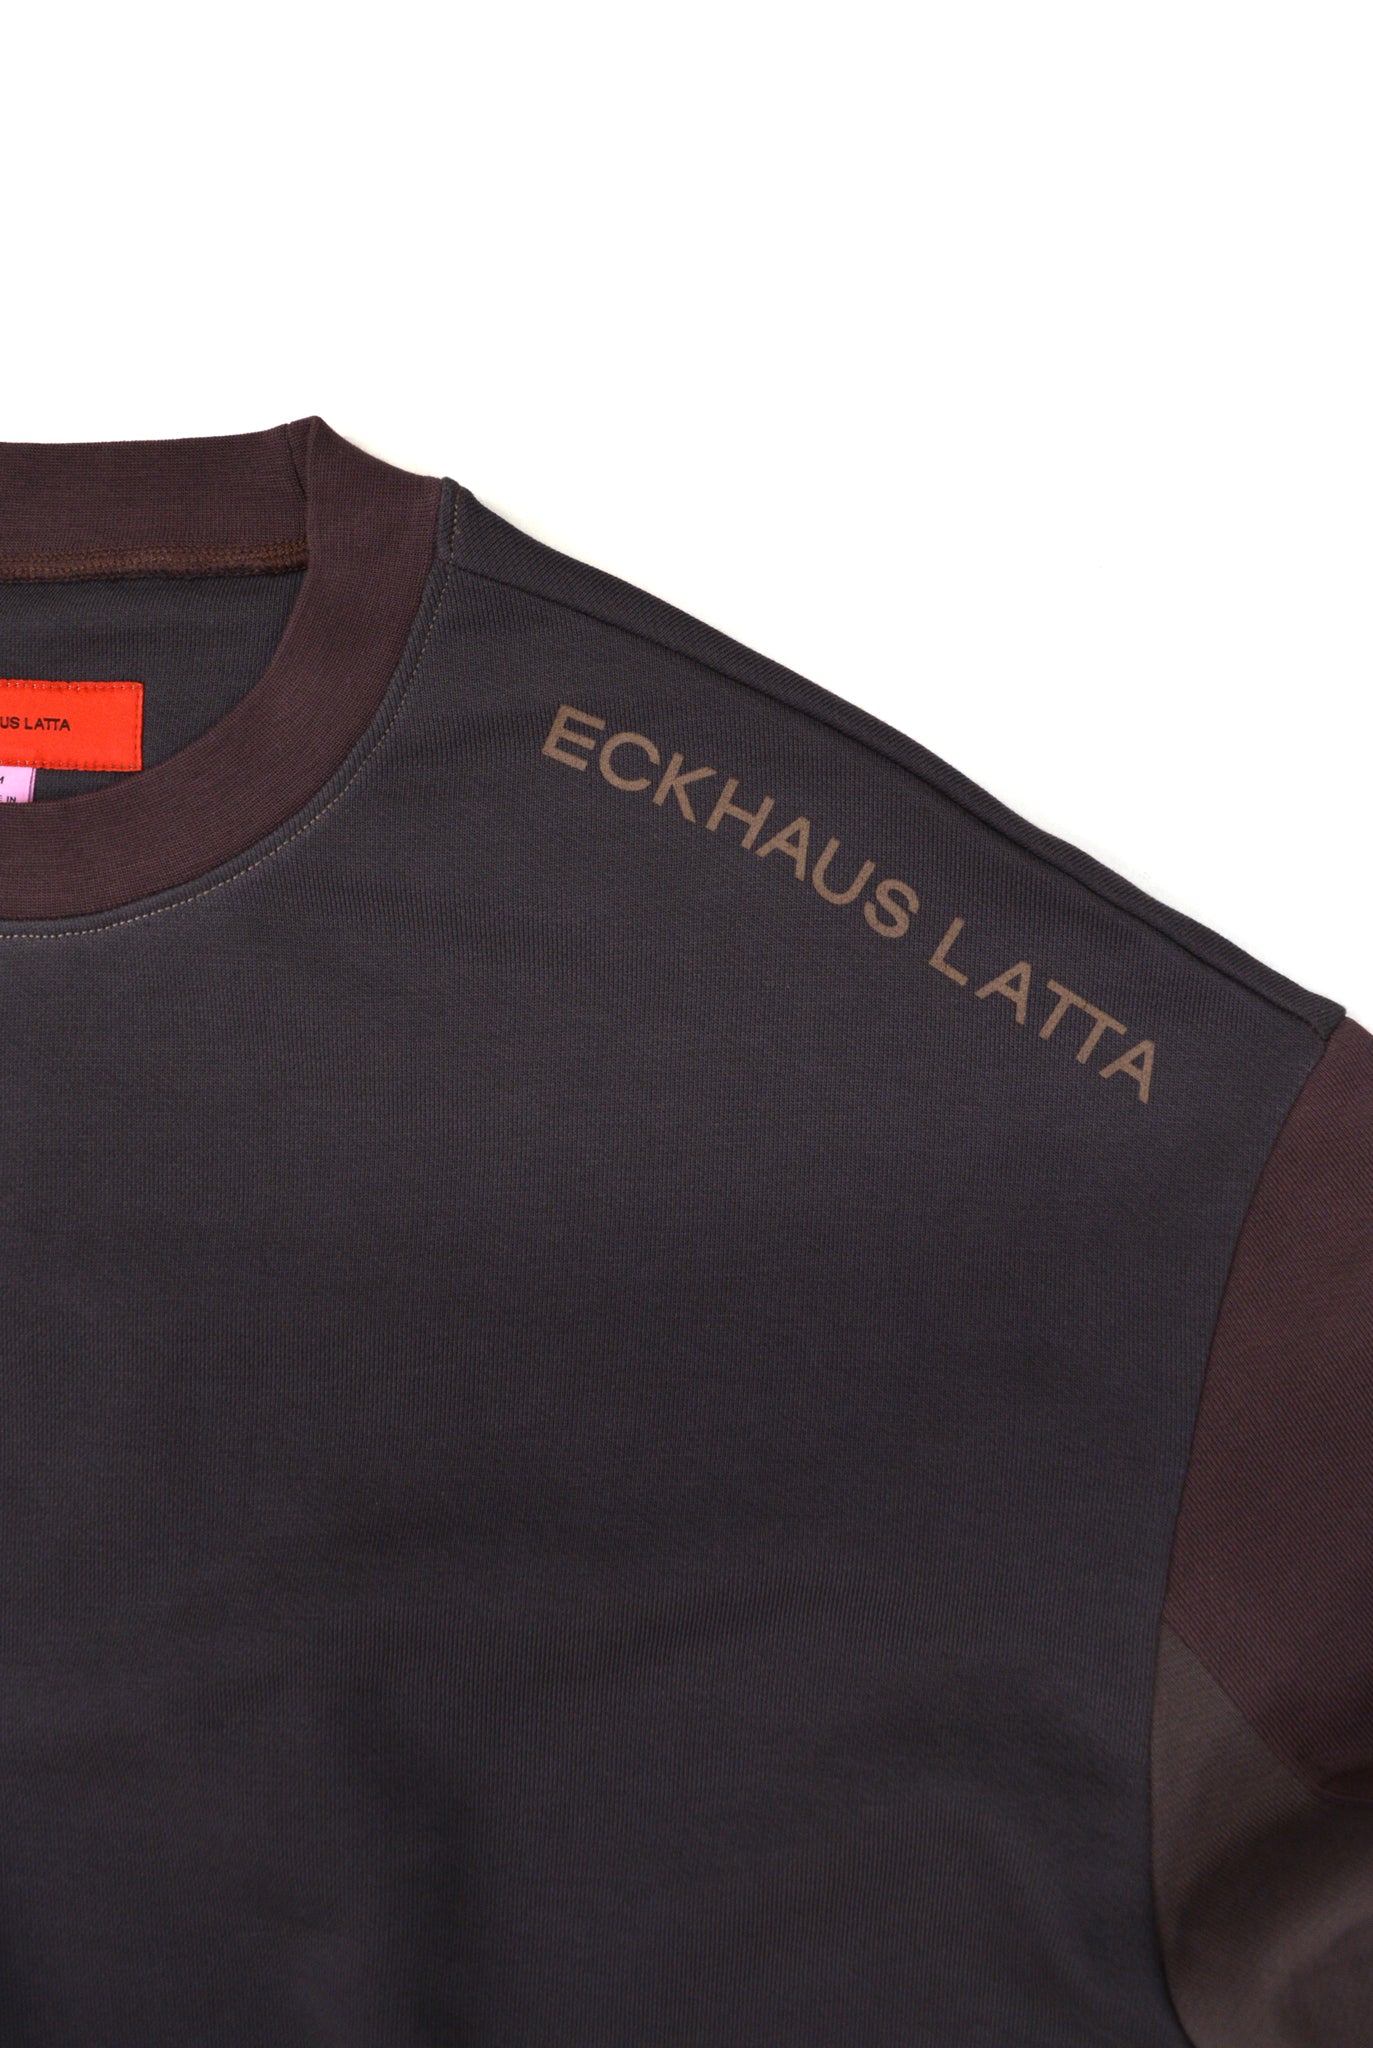 Eckhaus Latta Cropped Sweatshirt, Overcast